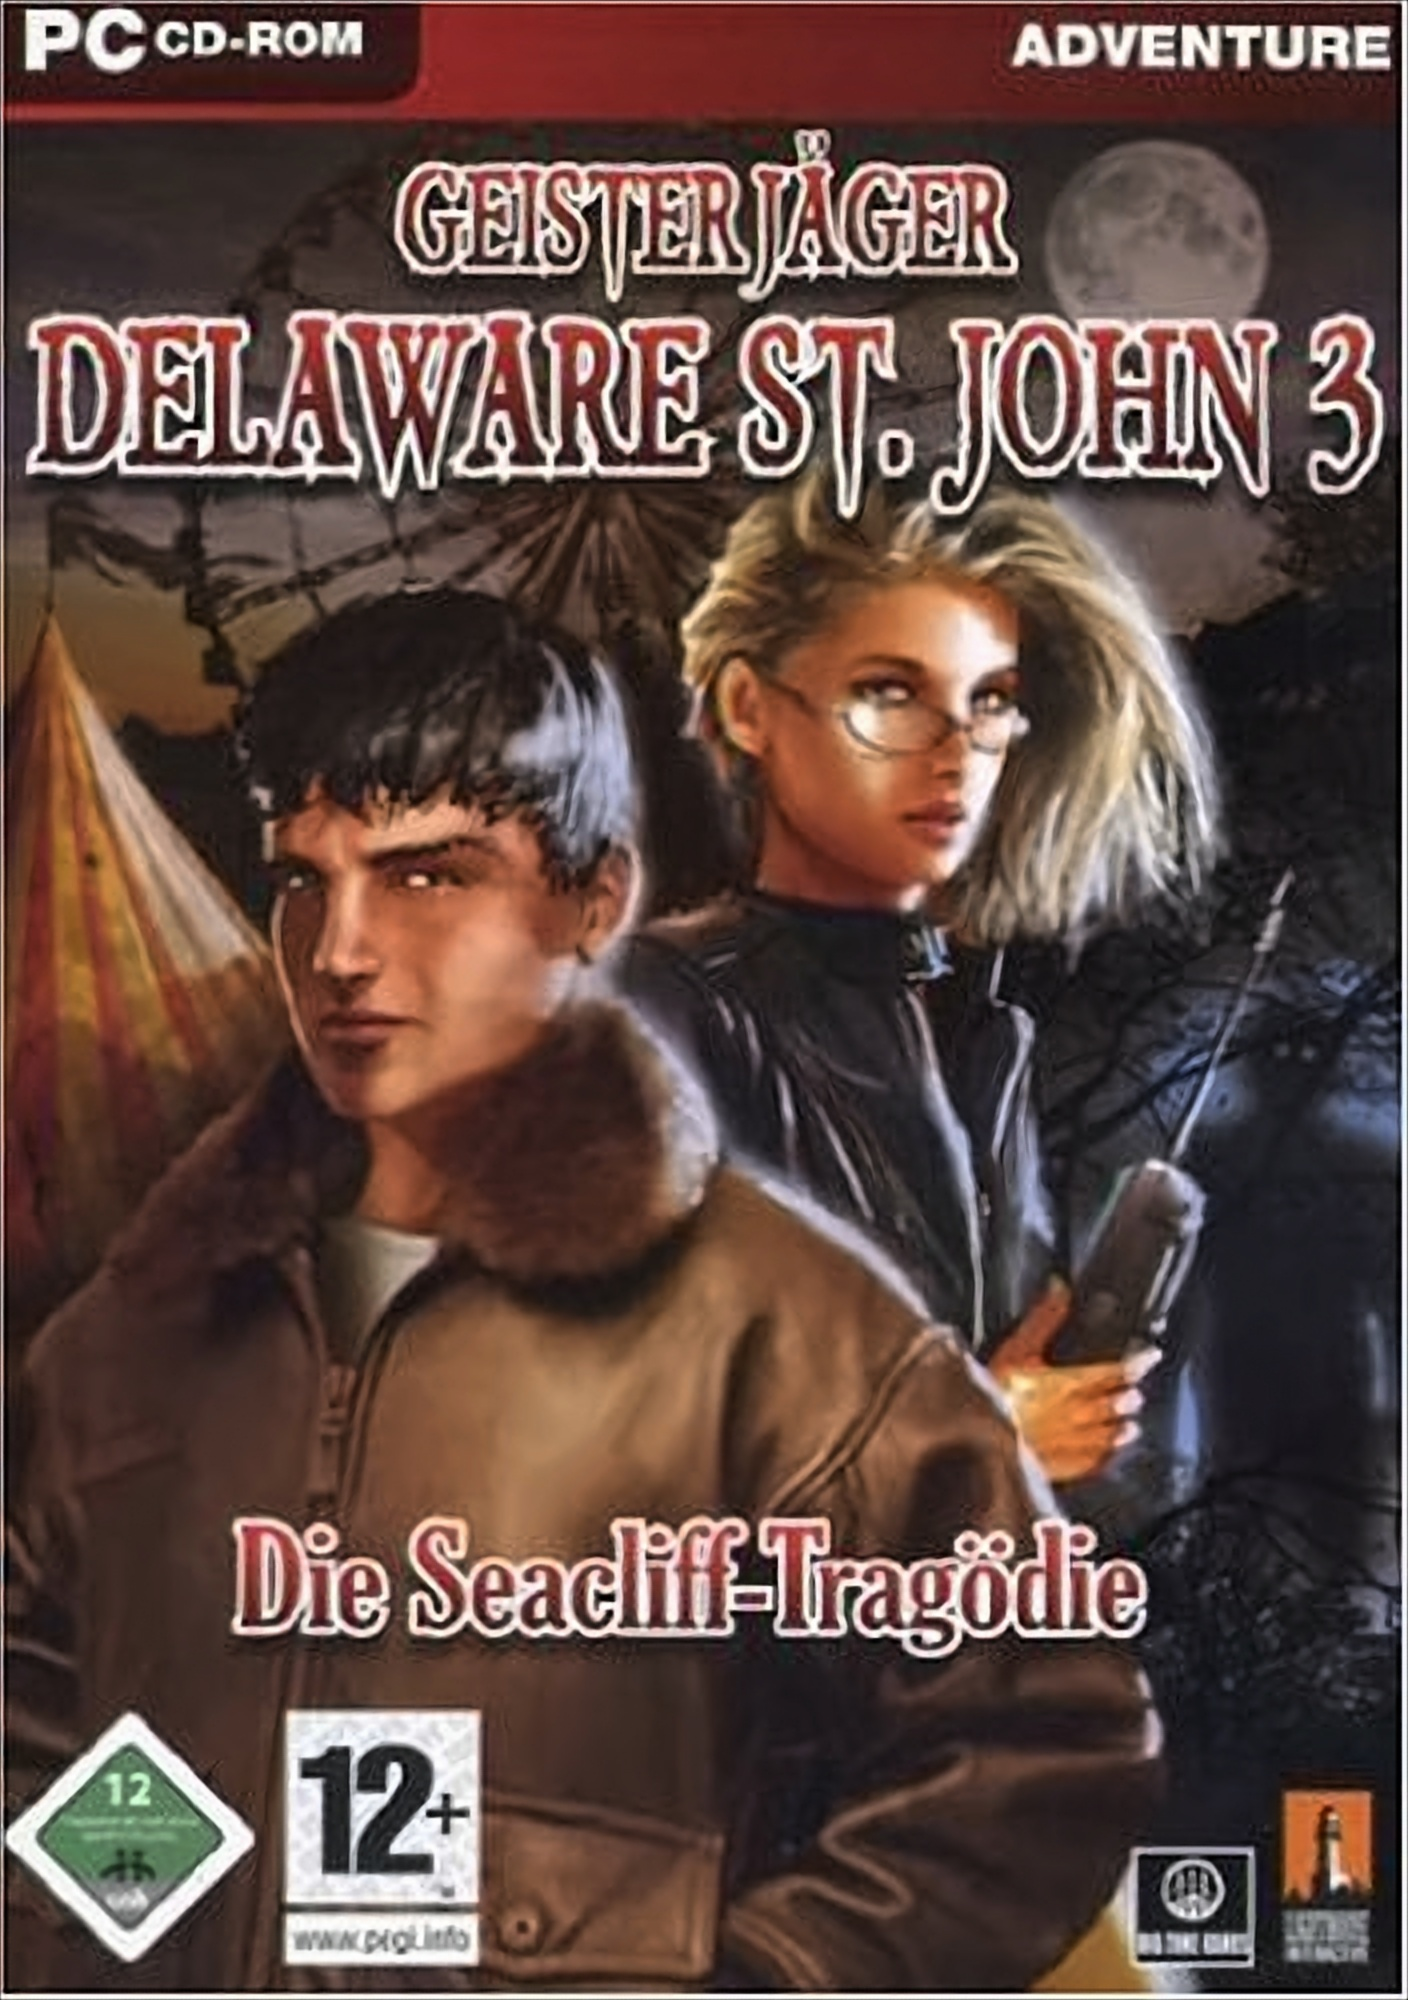 Geisterjäger Delaware St. [PC] Vol. Die - 3 John - Tragödie Seacliff